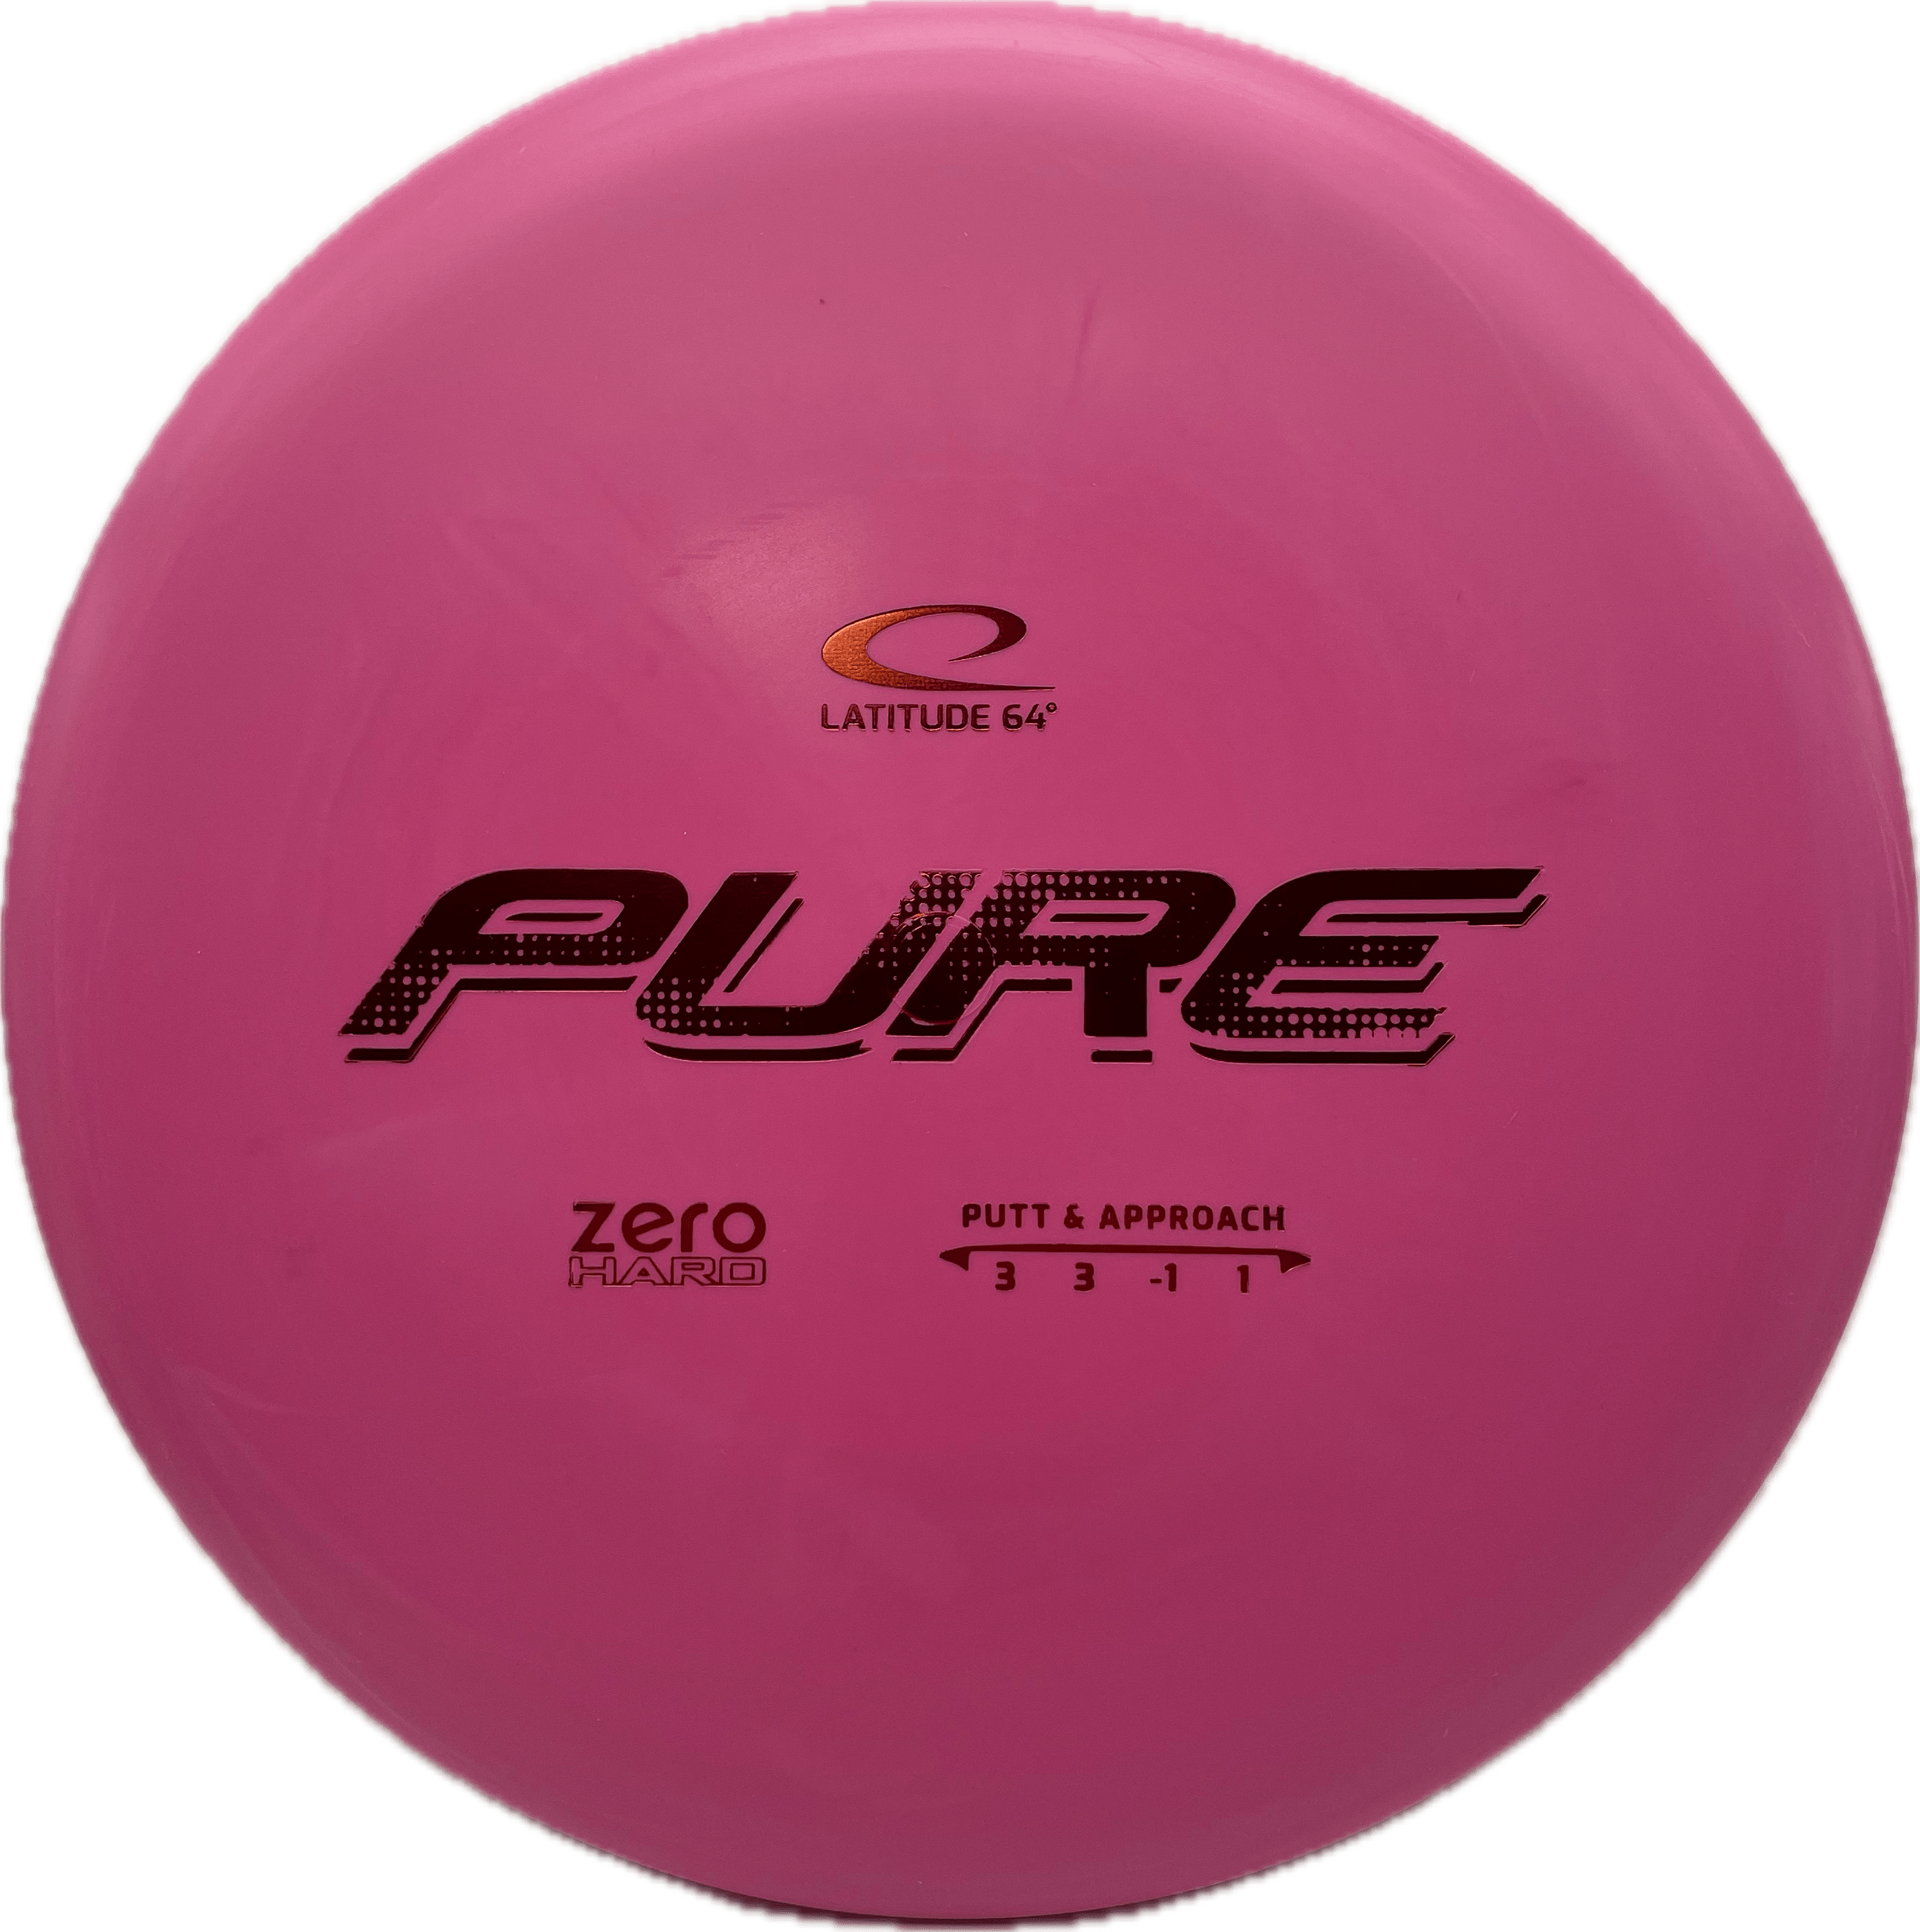 Latitude 64 Disc L64 Pure, Zero Hard, 174, Pink, Red Metallic